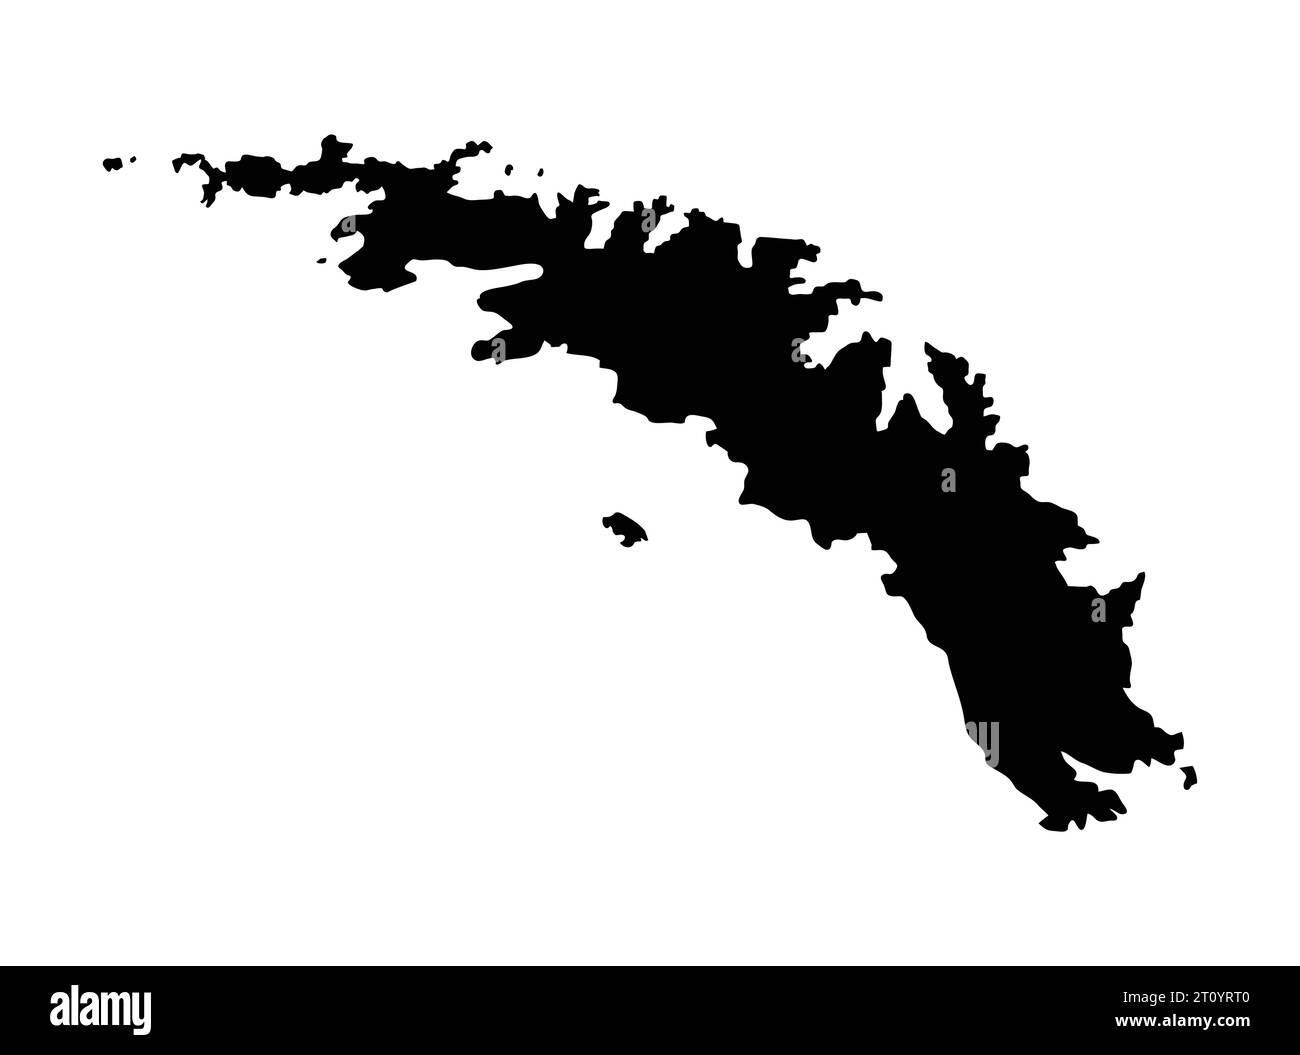 South georgia island map silhouette region territory, black shape style illustration Stock Vector